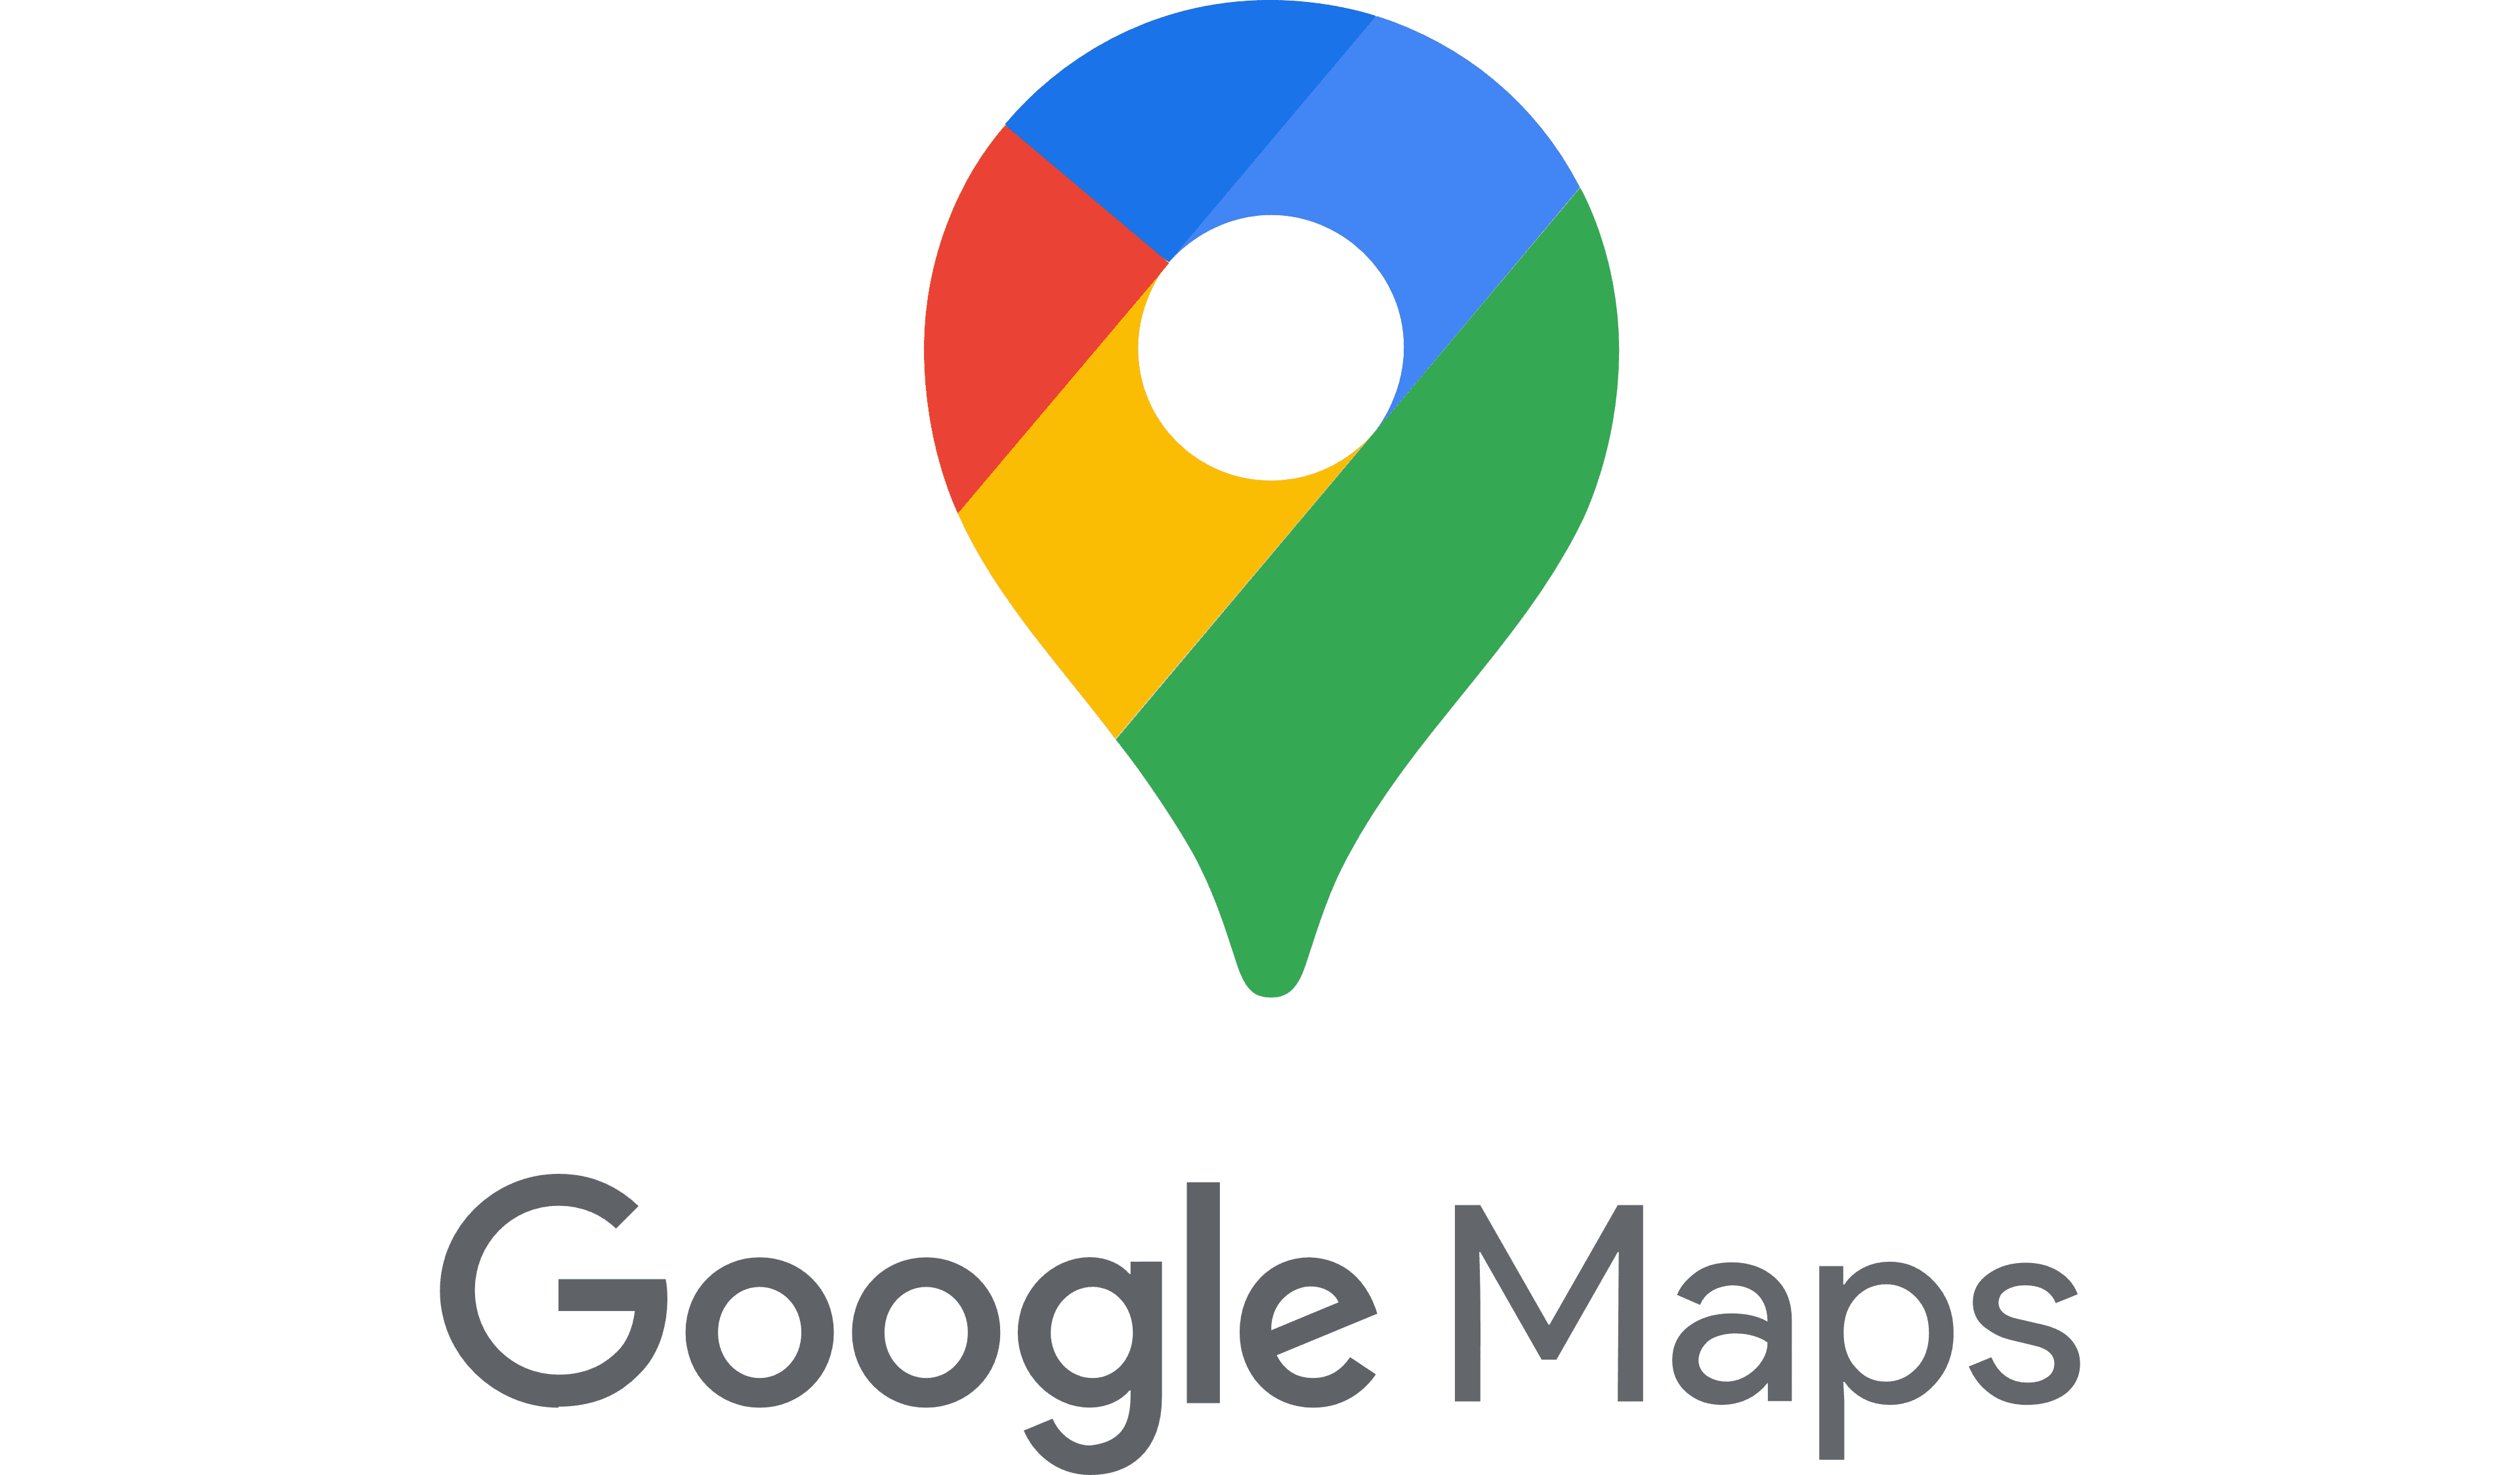 Google-Maps-logo